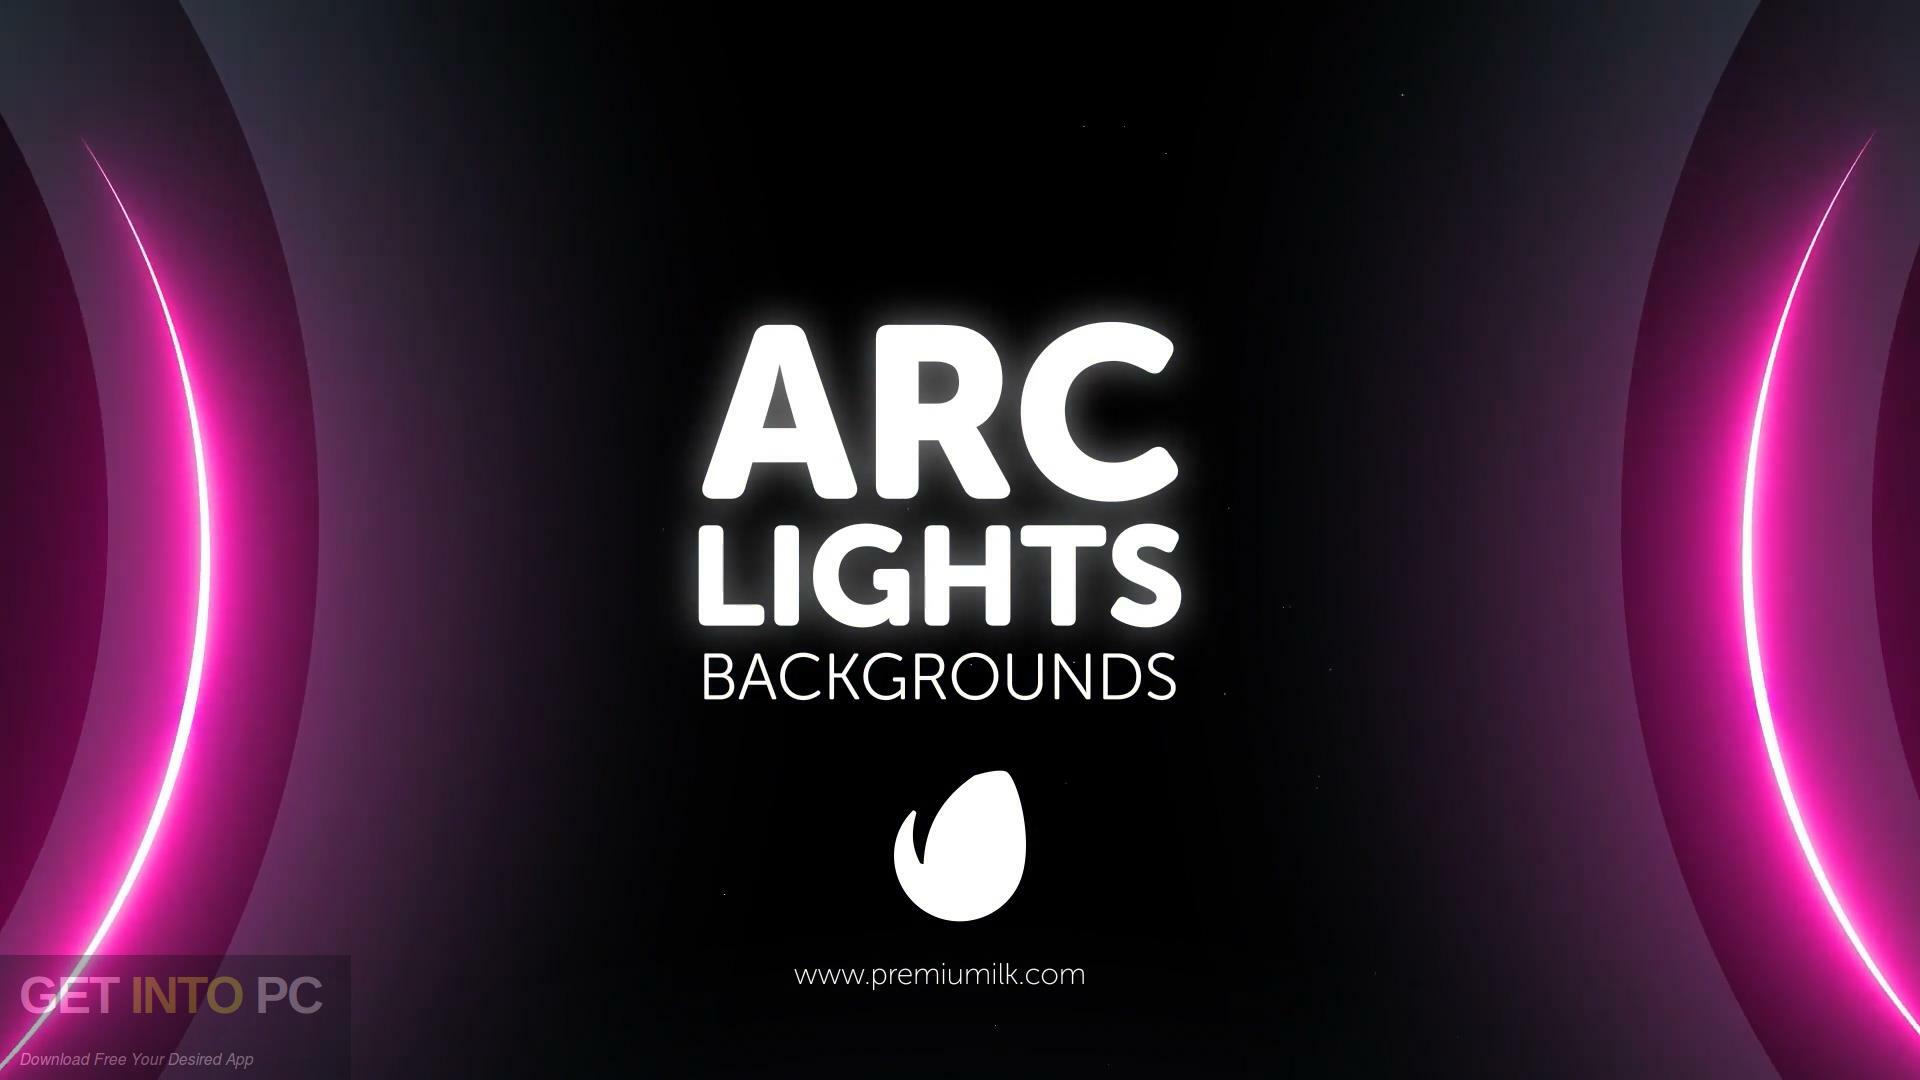 Arc light